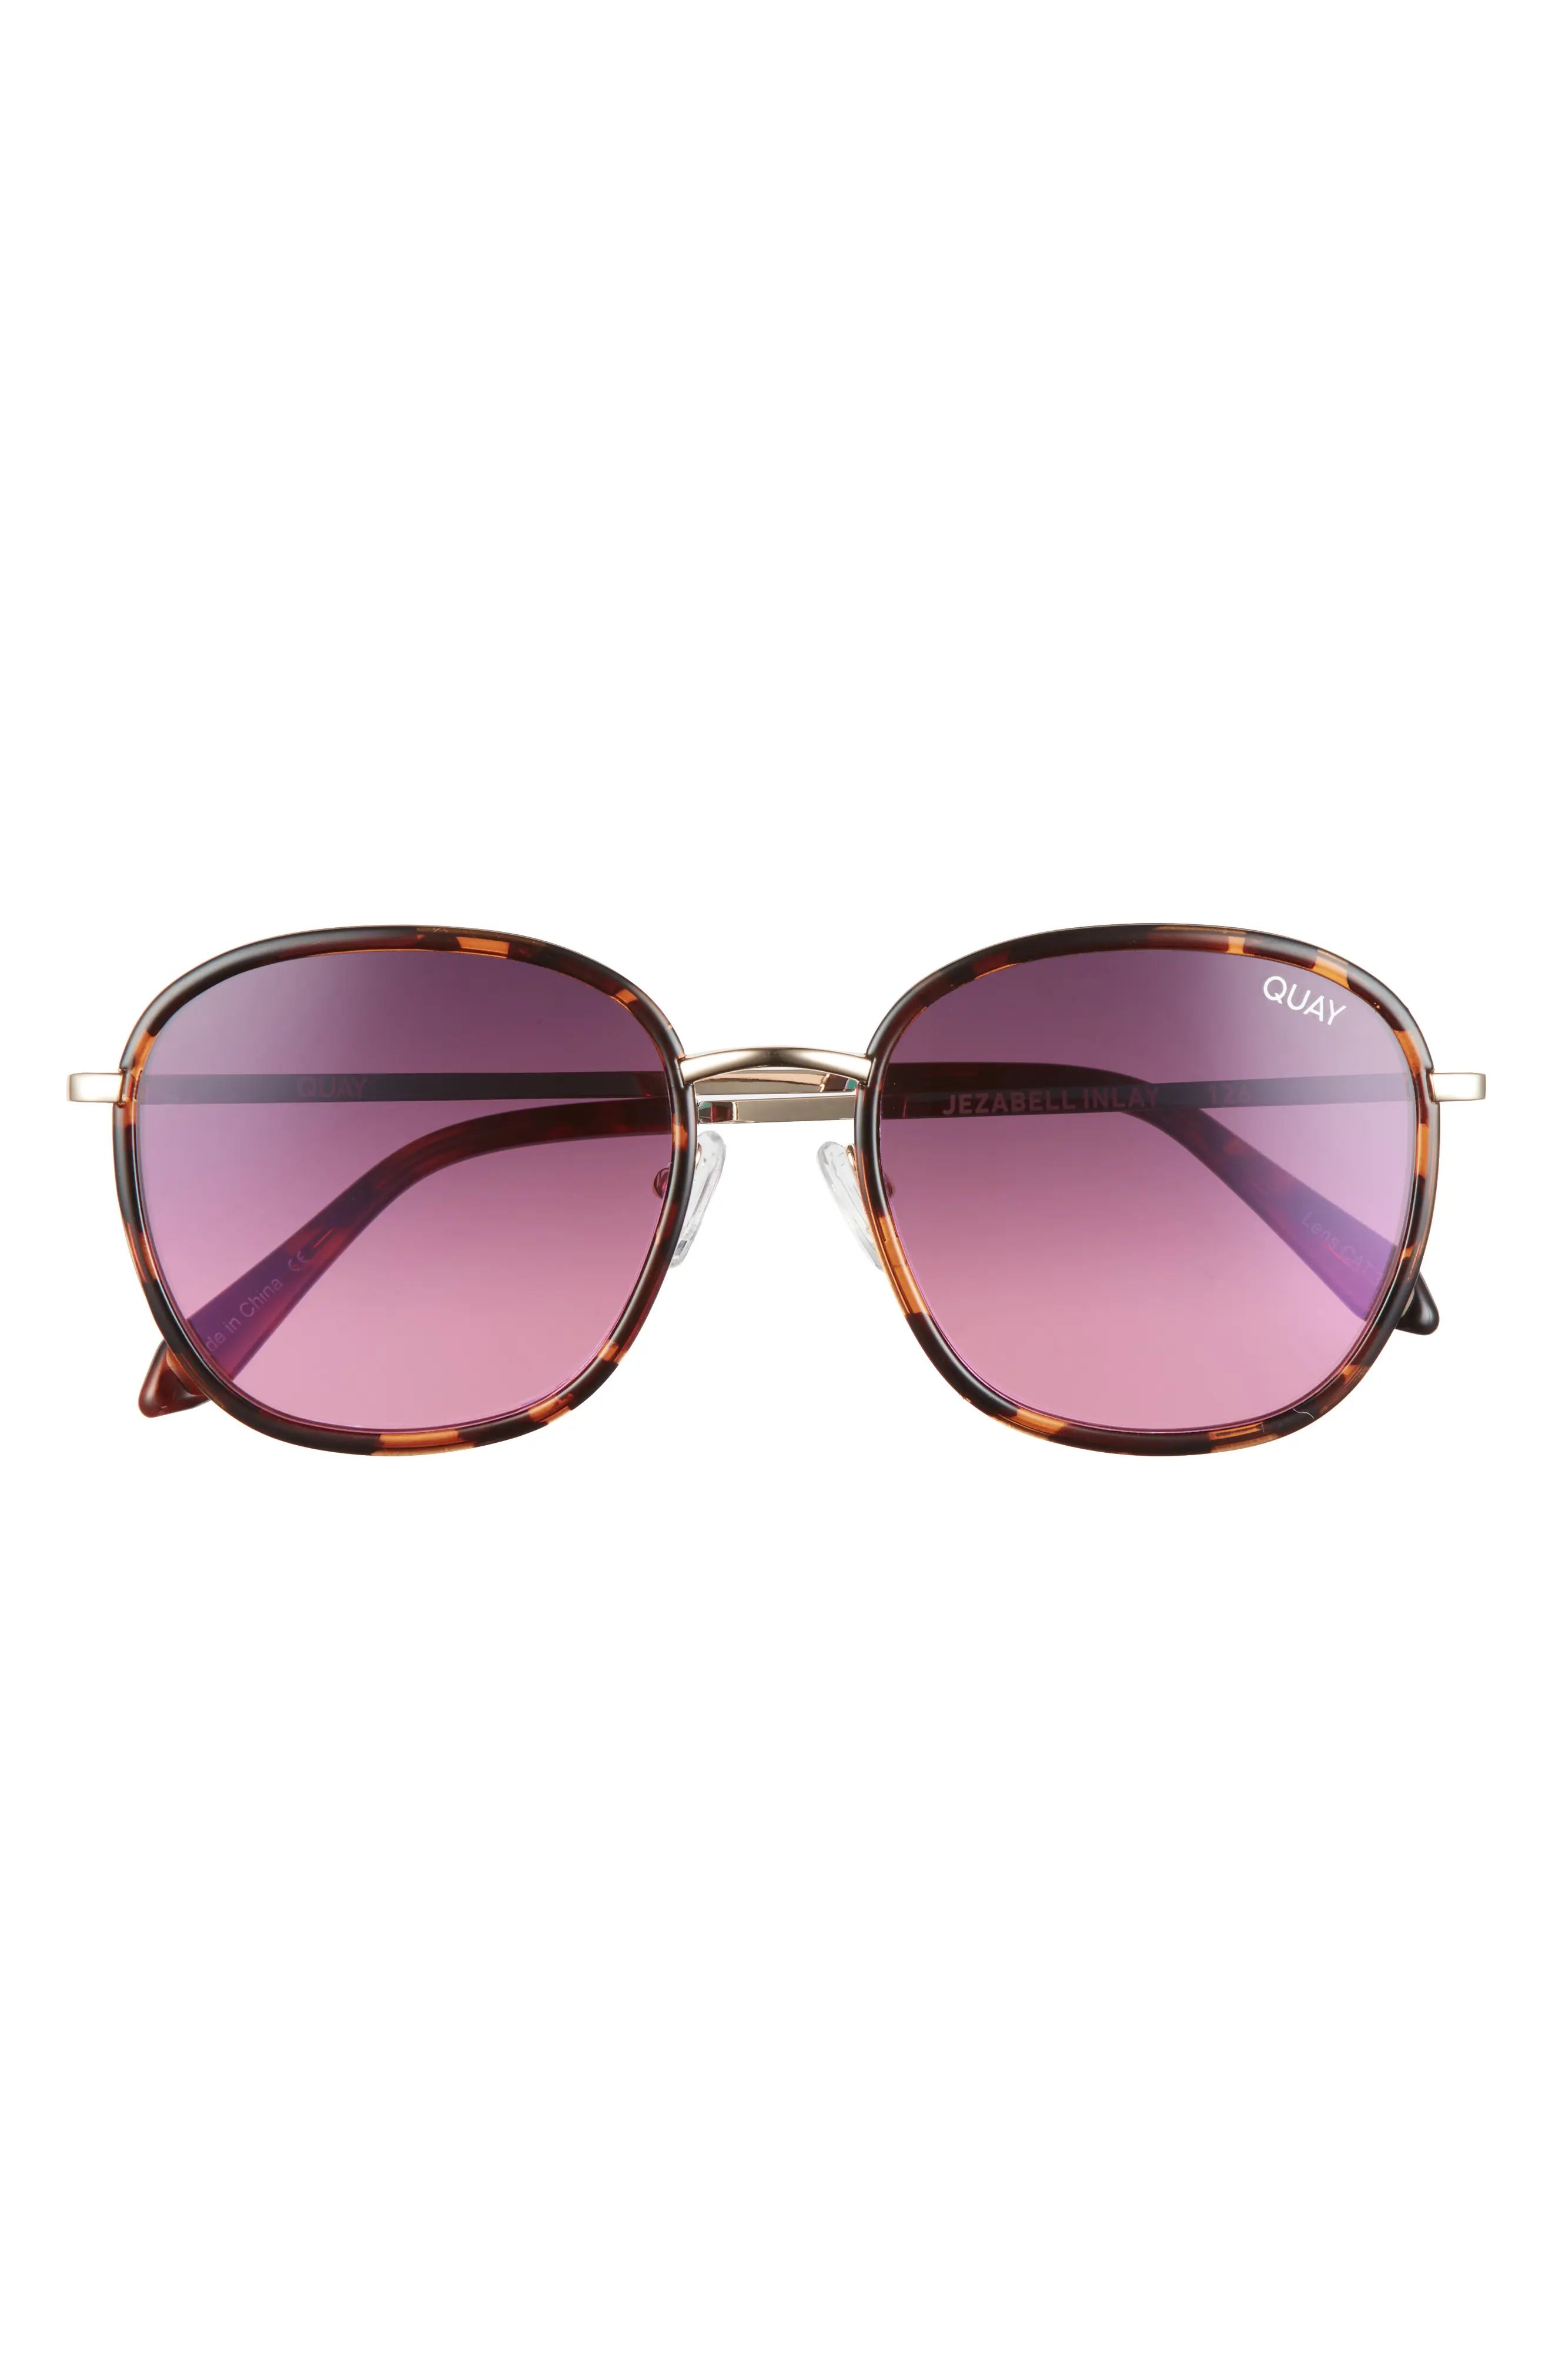 Women's Quay Australia Jezabell 53mm Polarized Round Sunglasses - Tort / Navy Peach Mirror | Nordstrom